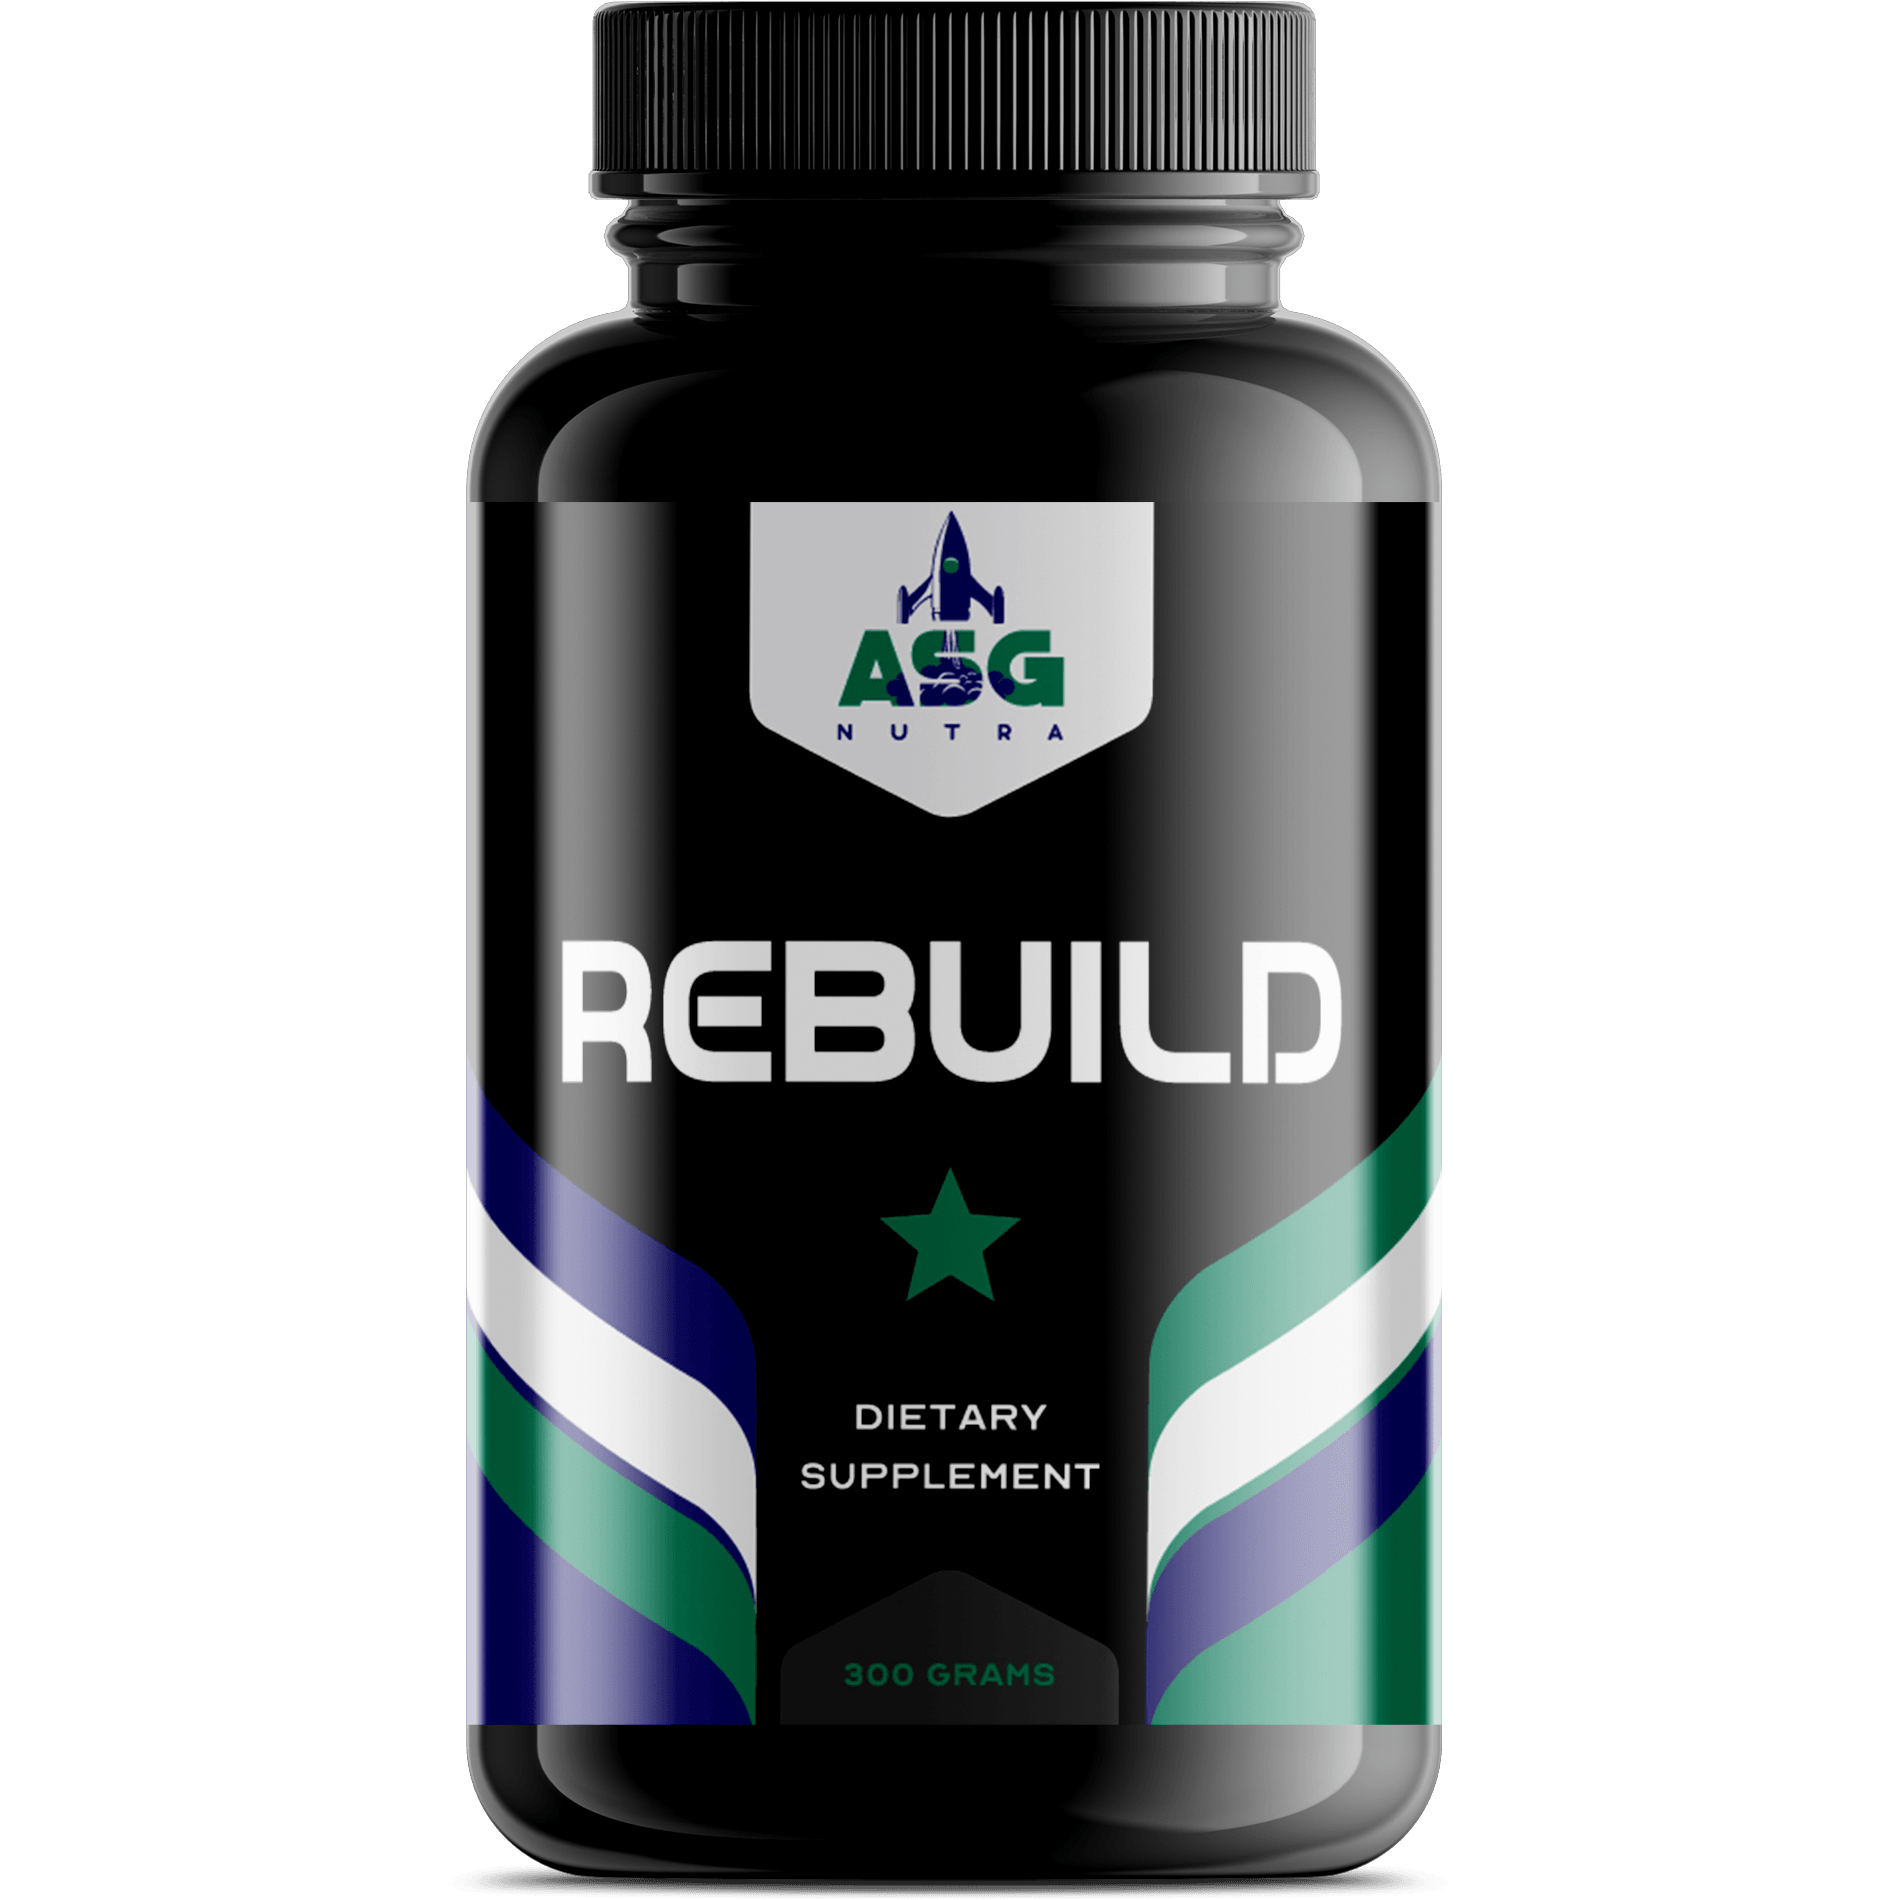 Rebuild - Creatine Monohydrate - ASGNUTRA